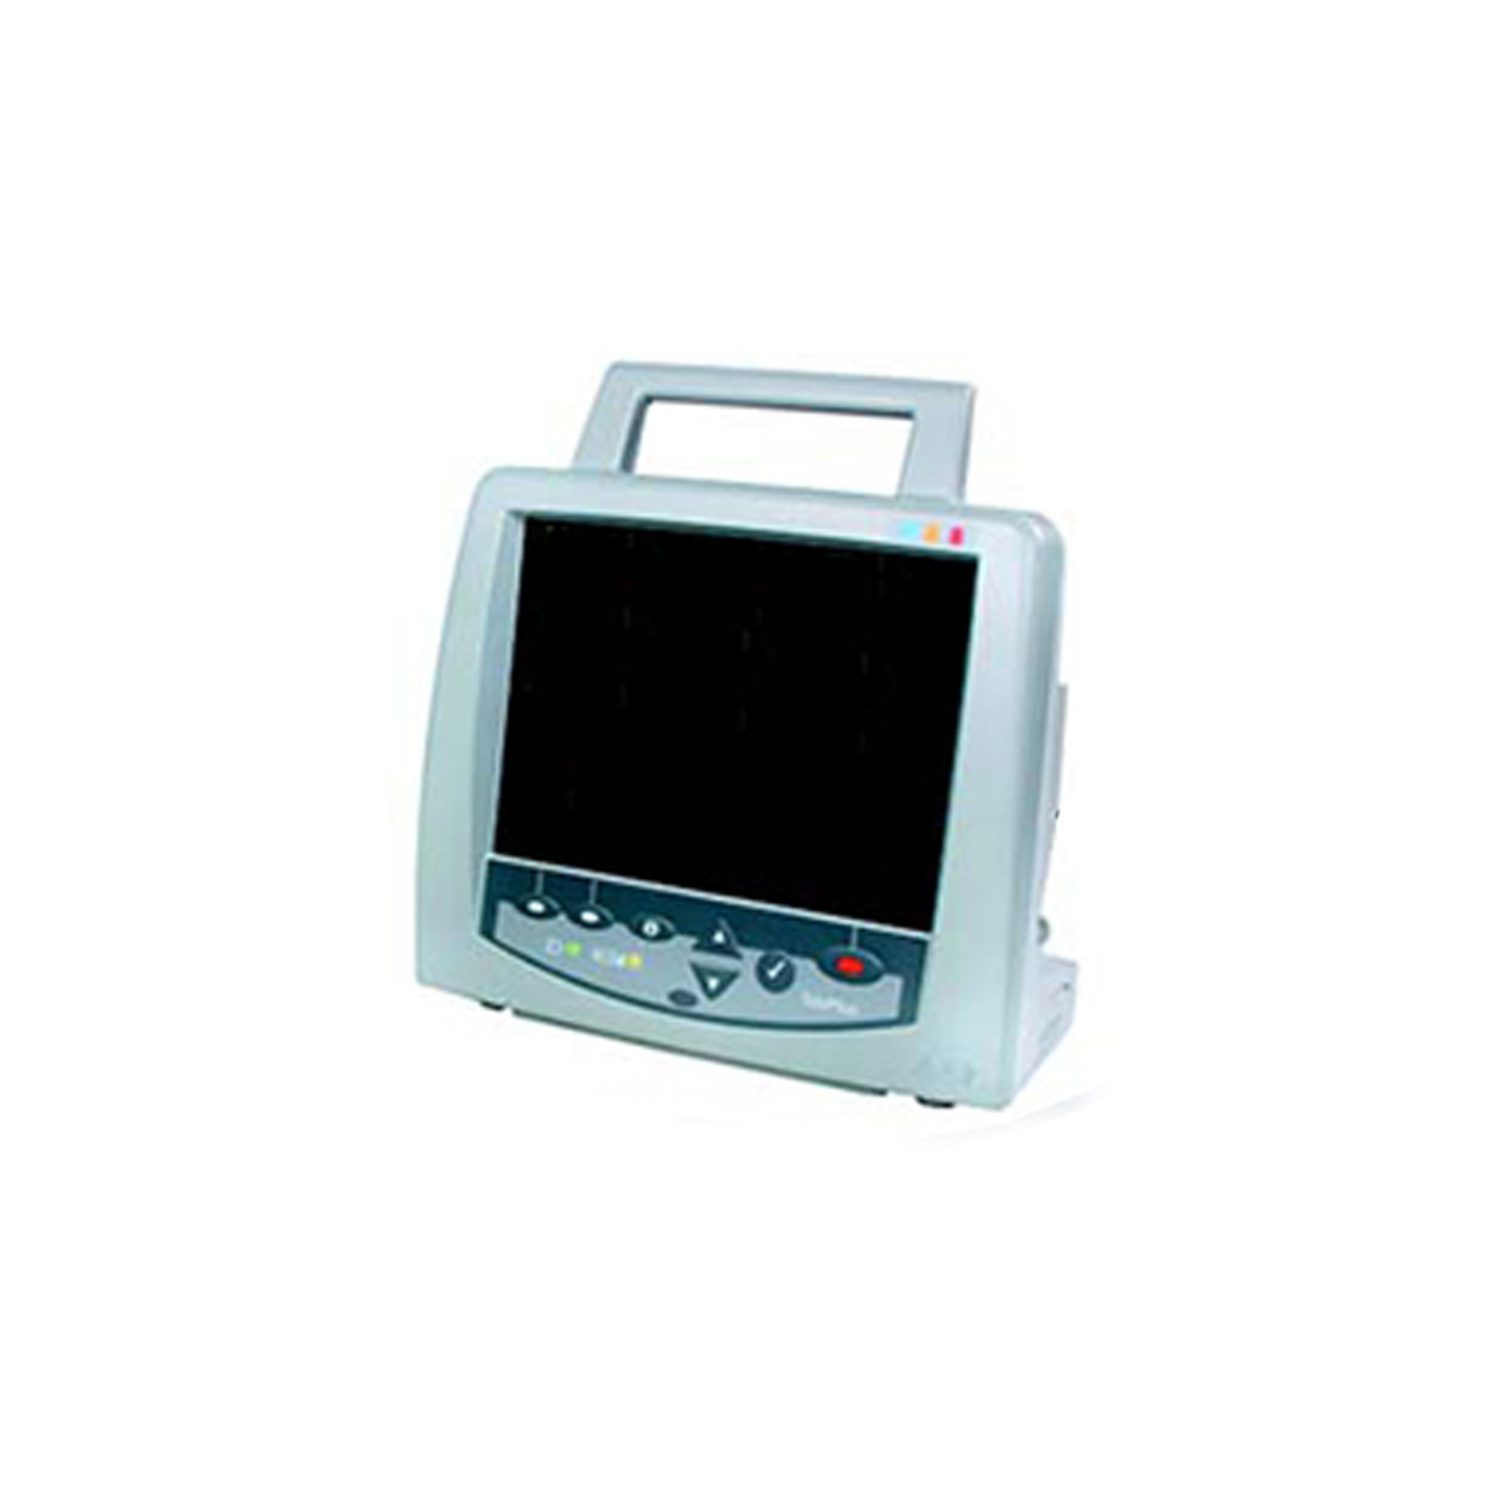 Philips M2636A Telemon A Vital Signs Monitor